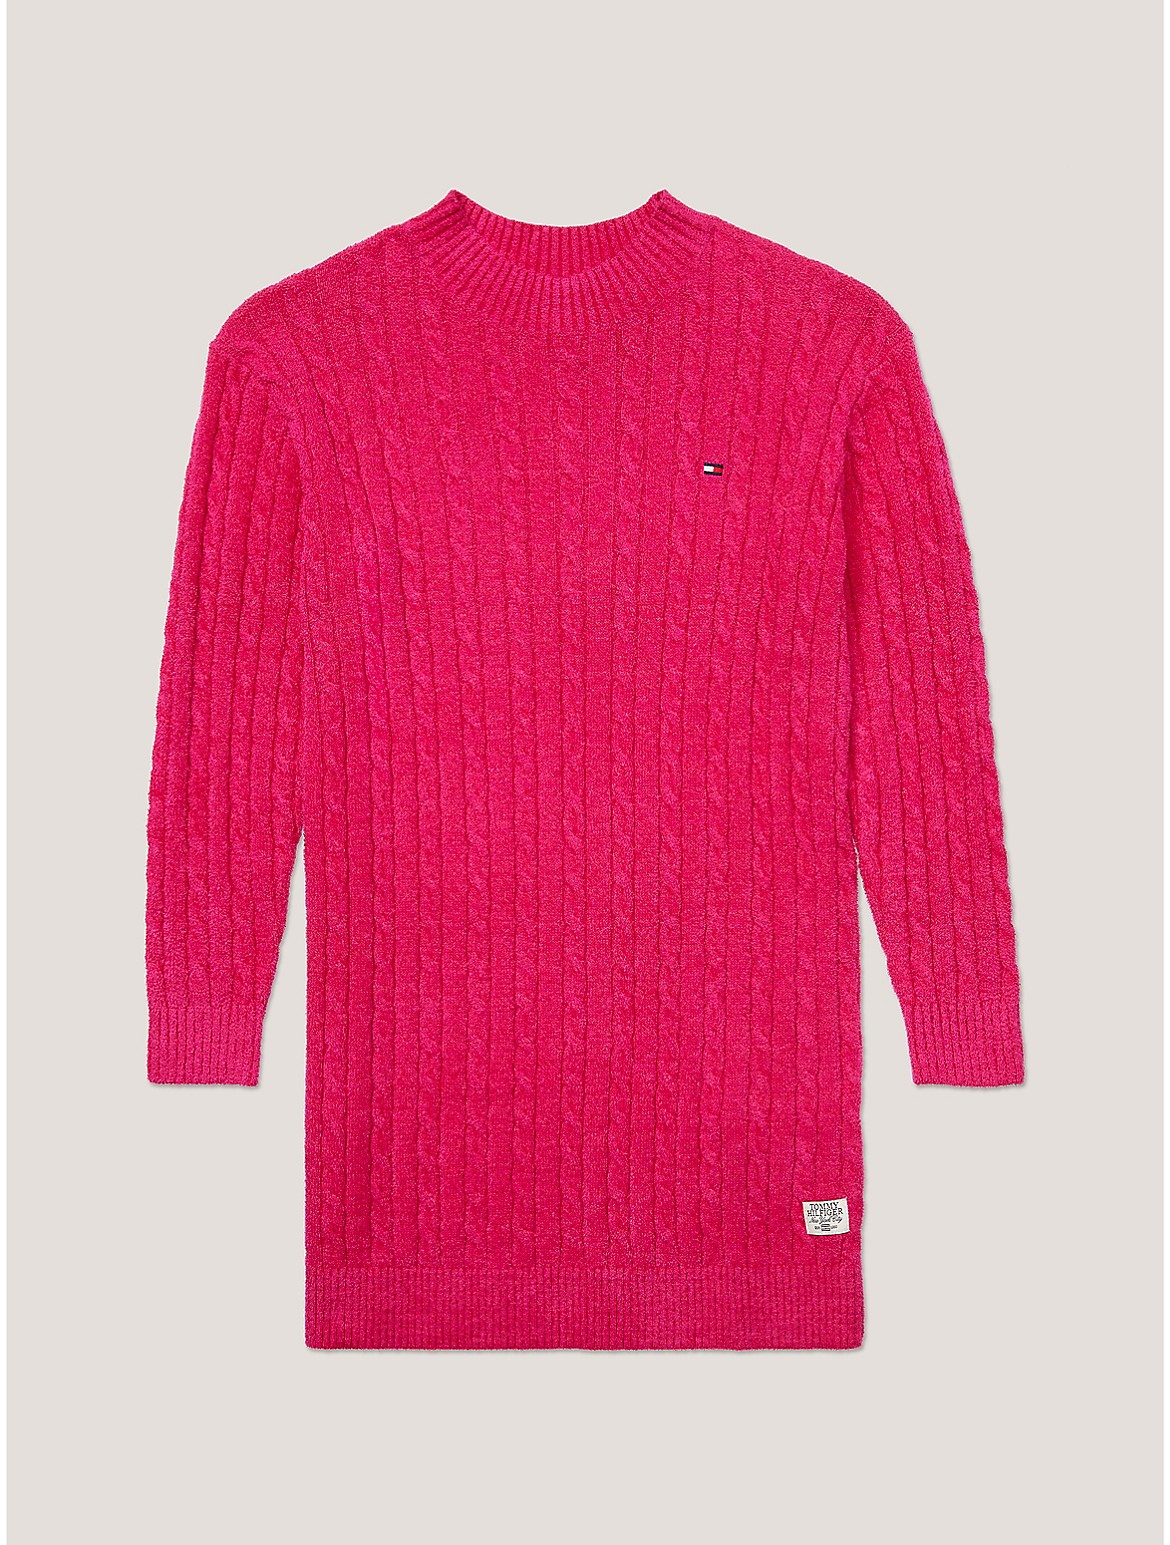 Tommy Hilfiger Girls' Kids' Cable Knit Sweater Dress - Pink - L